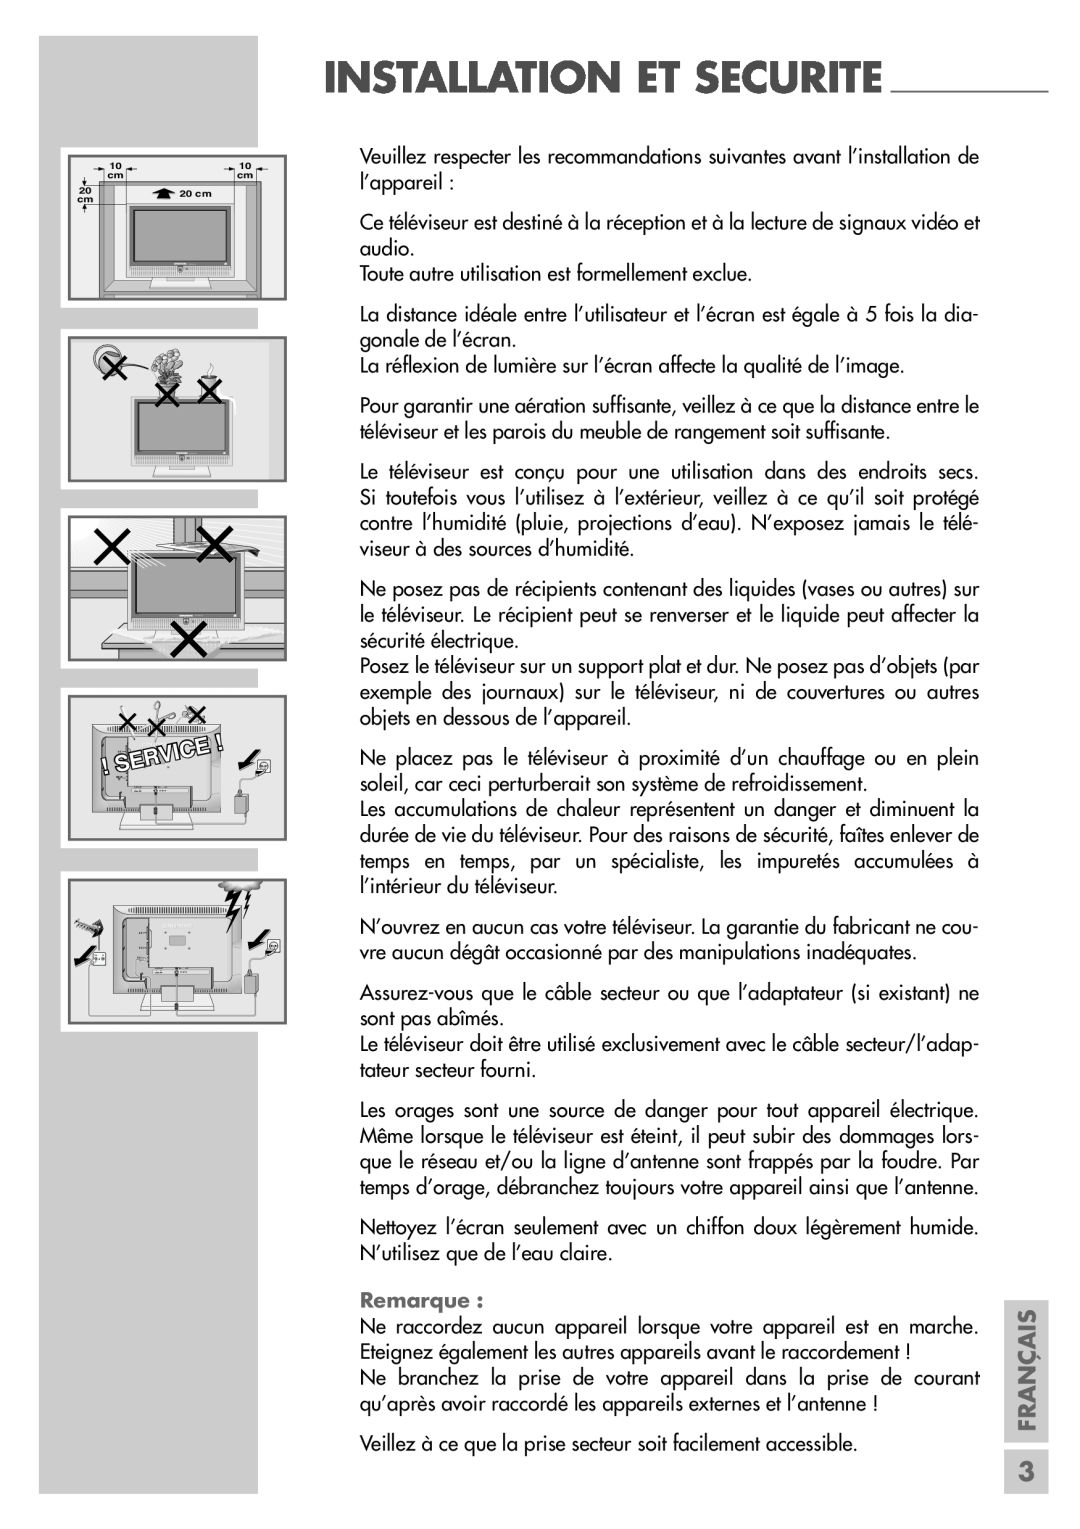 Grundig LW49-7710BS manual Installation Et Securite, Français, Vice 